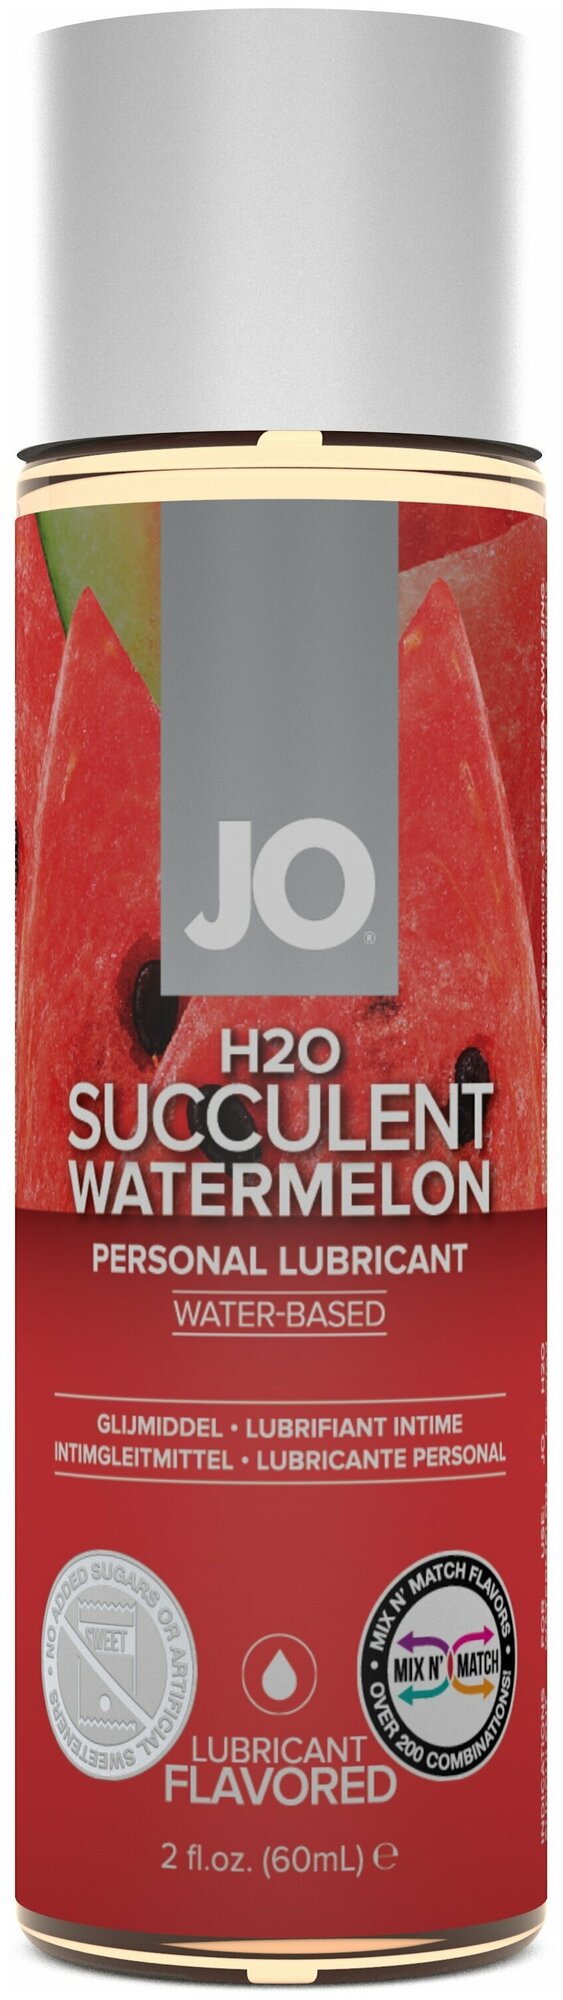 Лубрикант на водной основе с ароматом арбуза JO Flavored Watermelon - 60 мл.